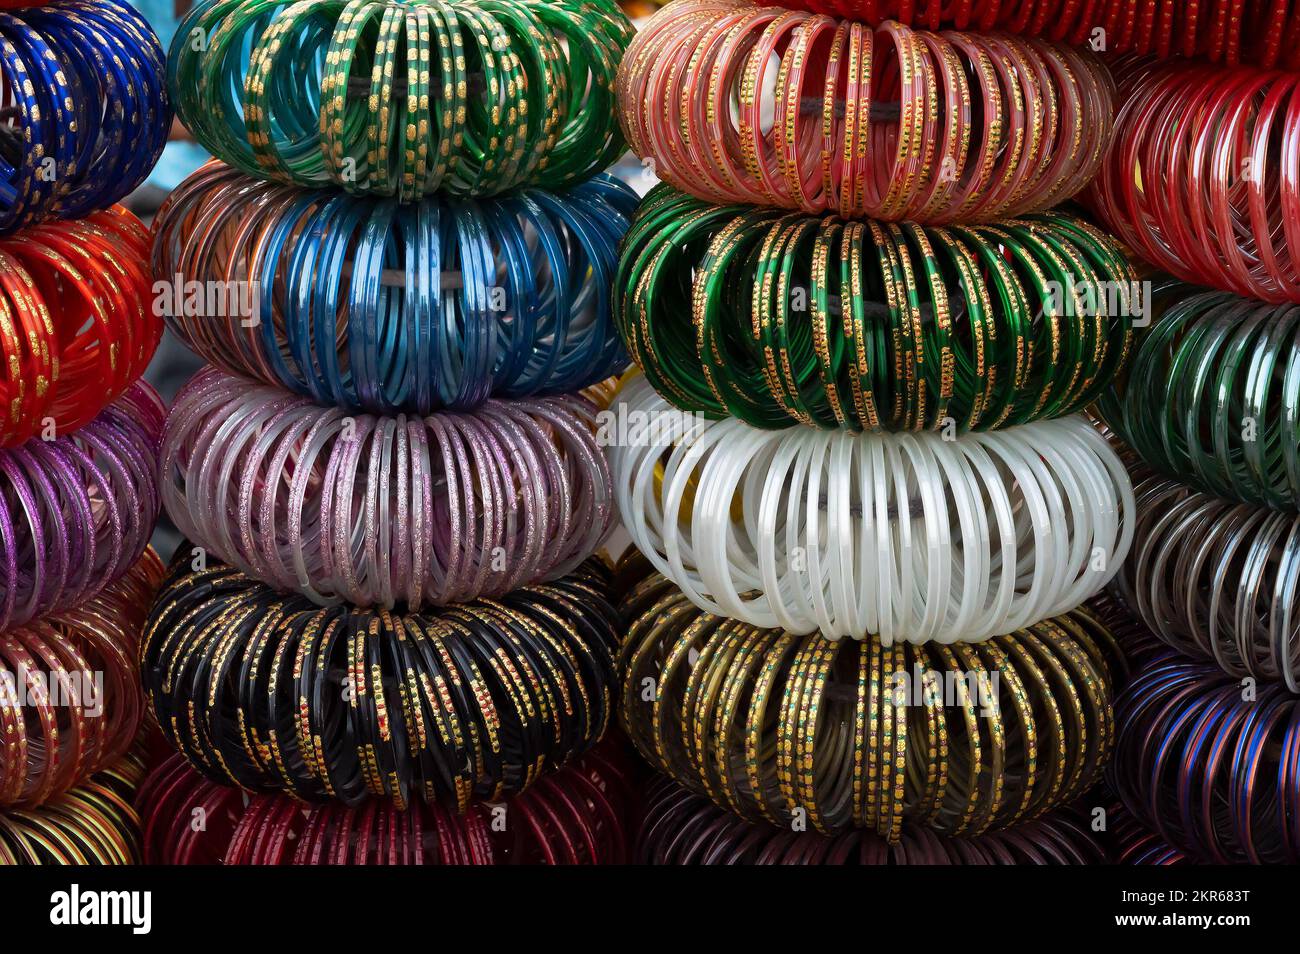 Colorful Rajasthani bangles being sold at famous Sardar Market and Ghanta ghar Clock tower in Jodhpur, Rajasthan, India. Stock Photo